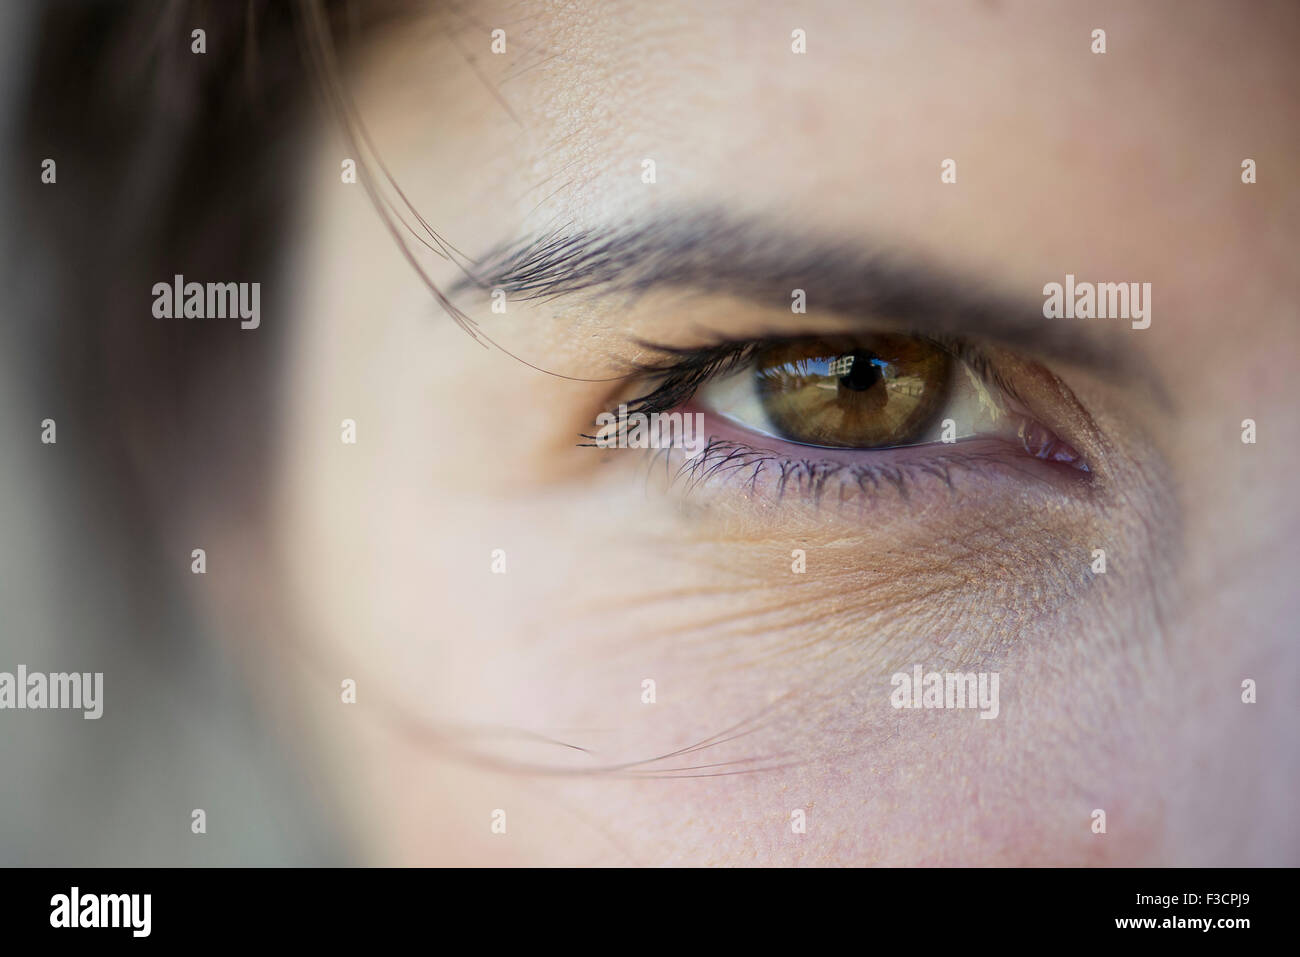 Woman's eye, close-up Banque D'Images